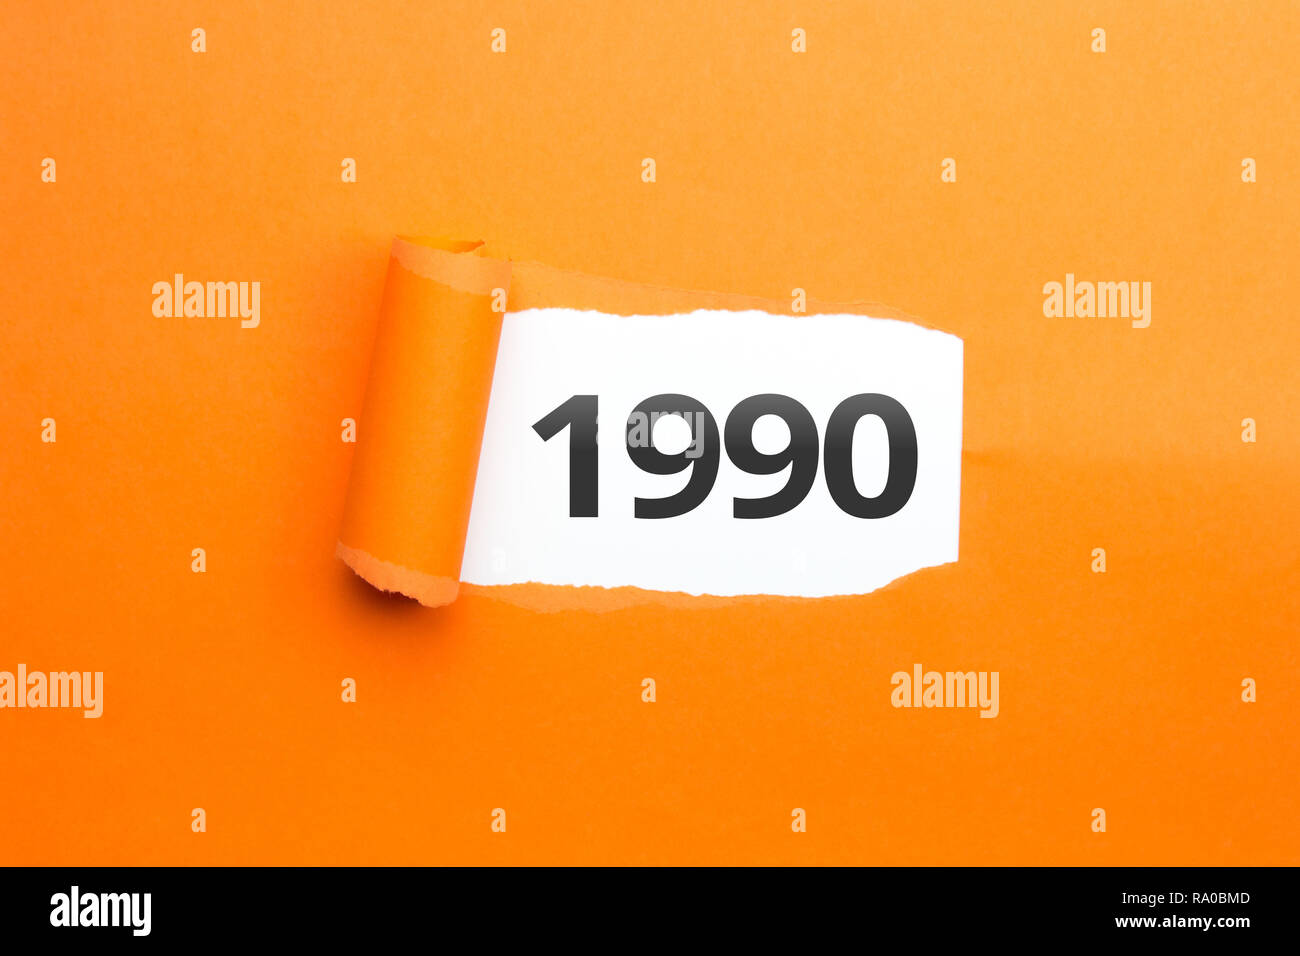 surprising Number / Year 1990 orange background Stock Photo